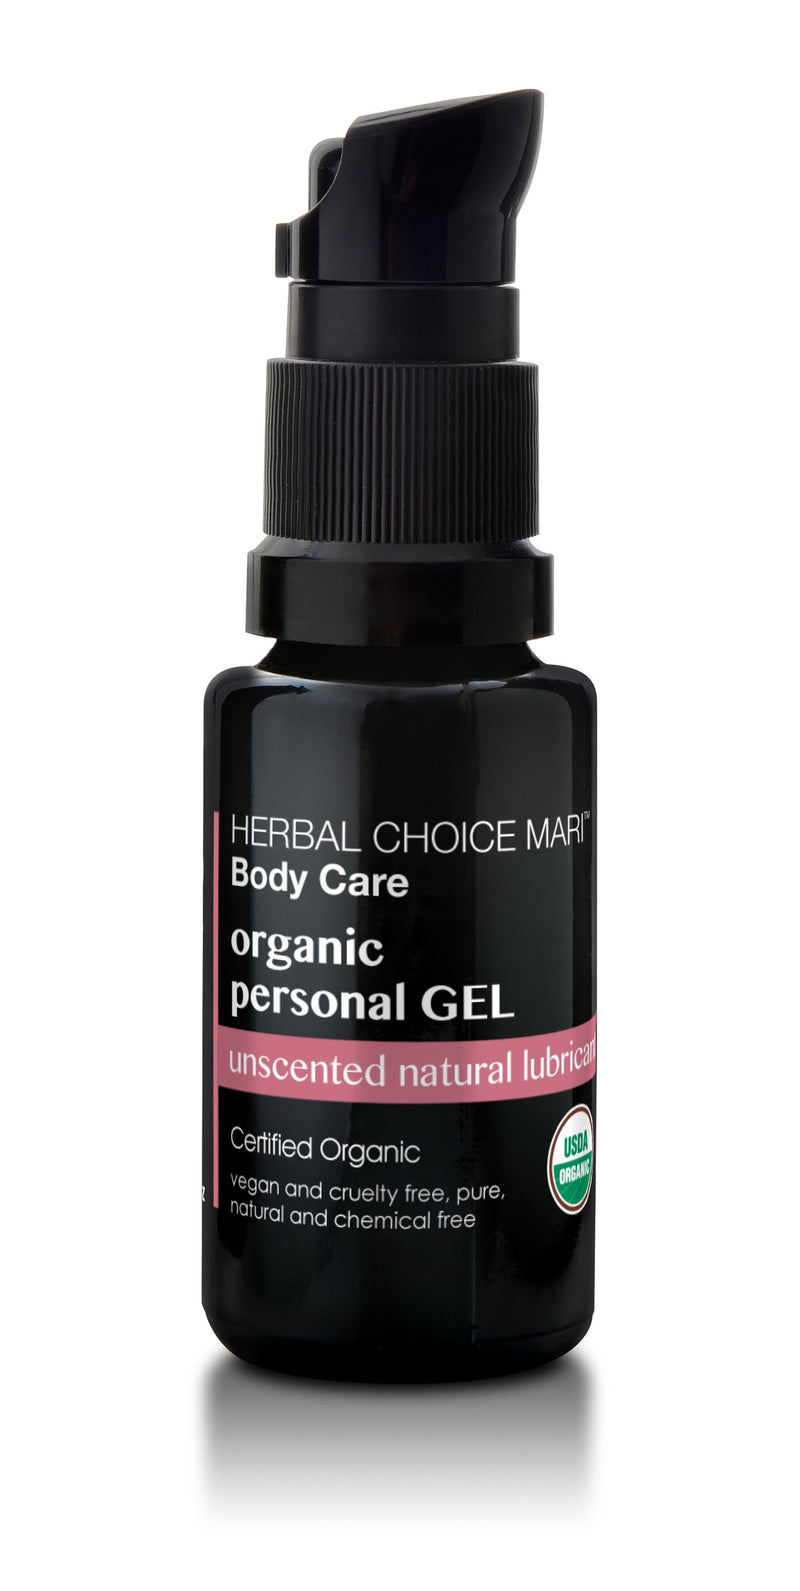 Herbal Choice Mari Organic Personal Lubricant - Herbal Choice Mari Organic Personal Lubricant - Herbal Choice Mari Organic Personal Lubricant